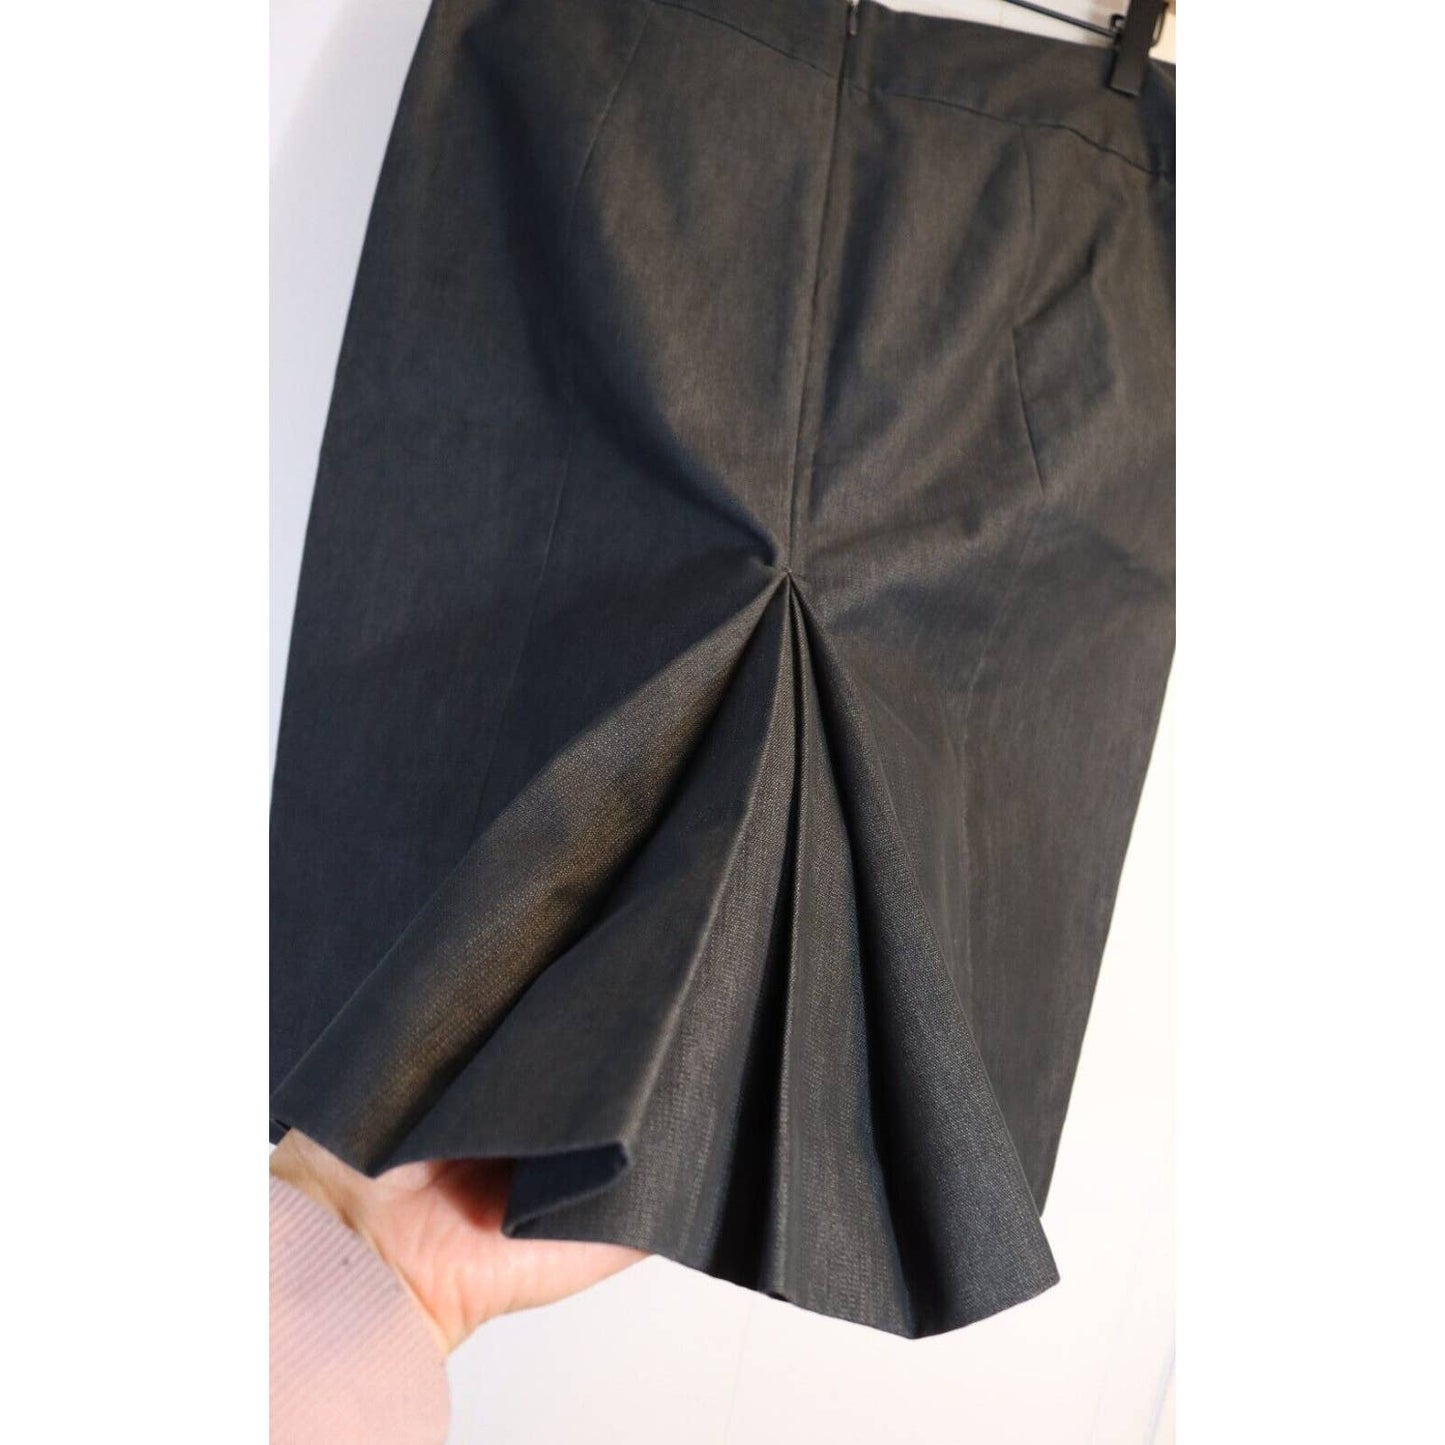 Ann Taylor Loft's Pencil Straight Skirt in Elegant Grey